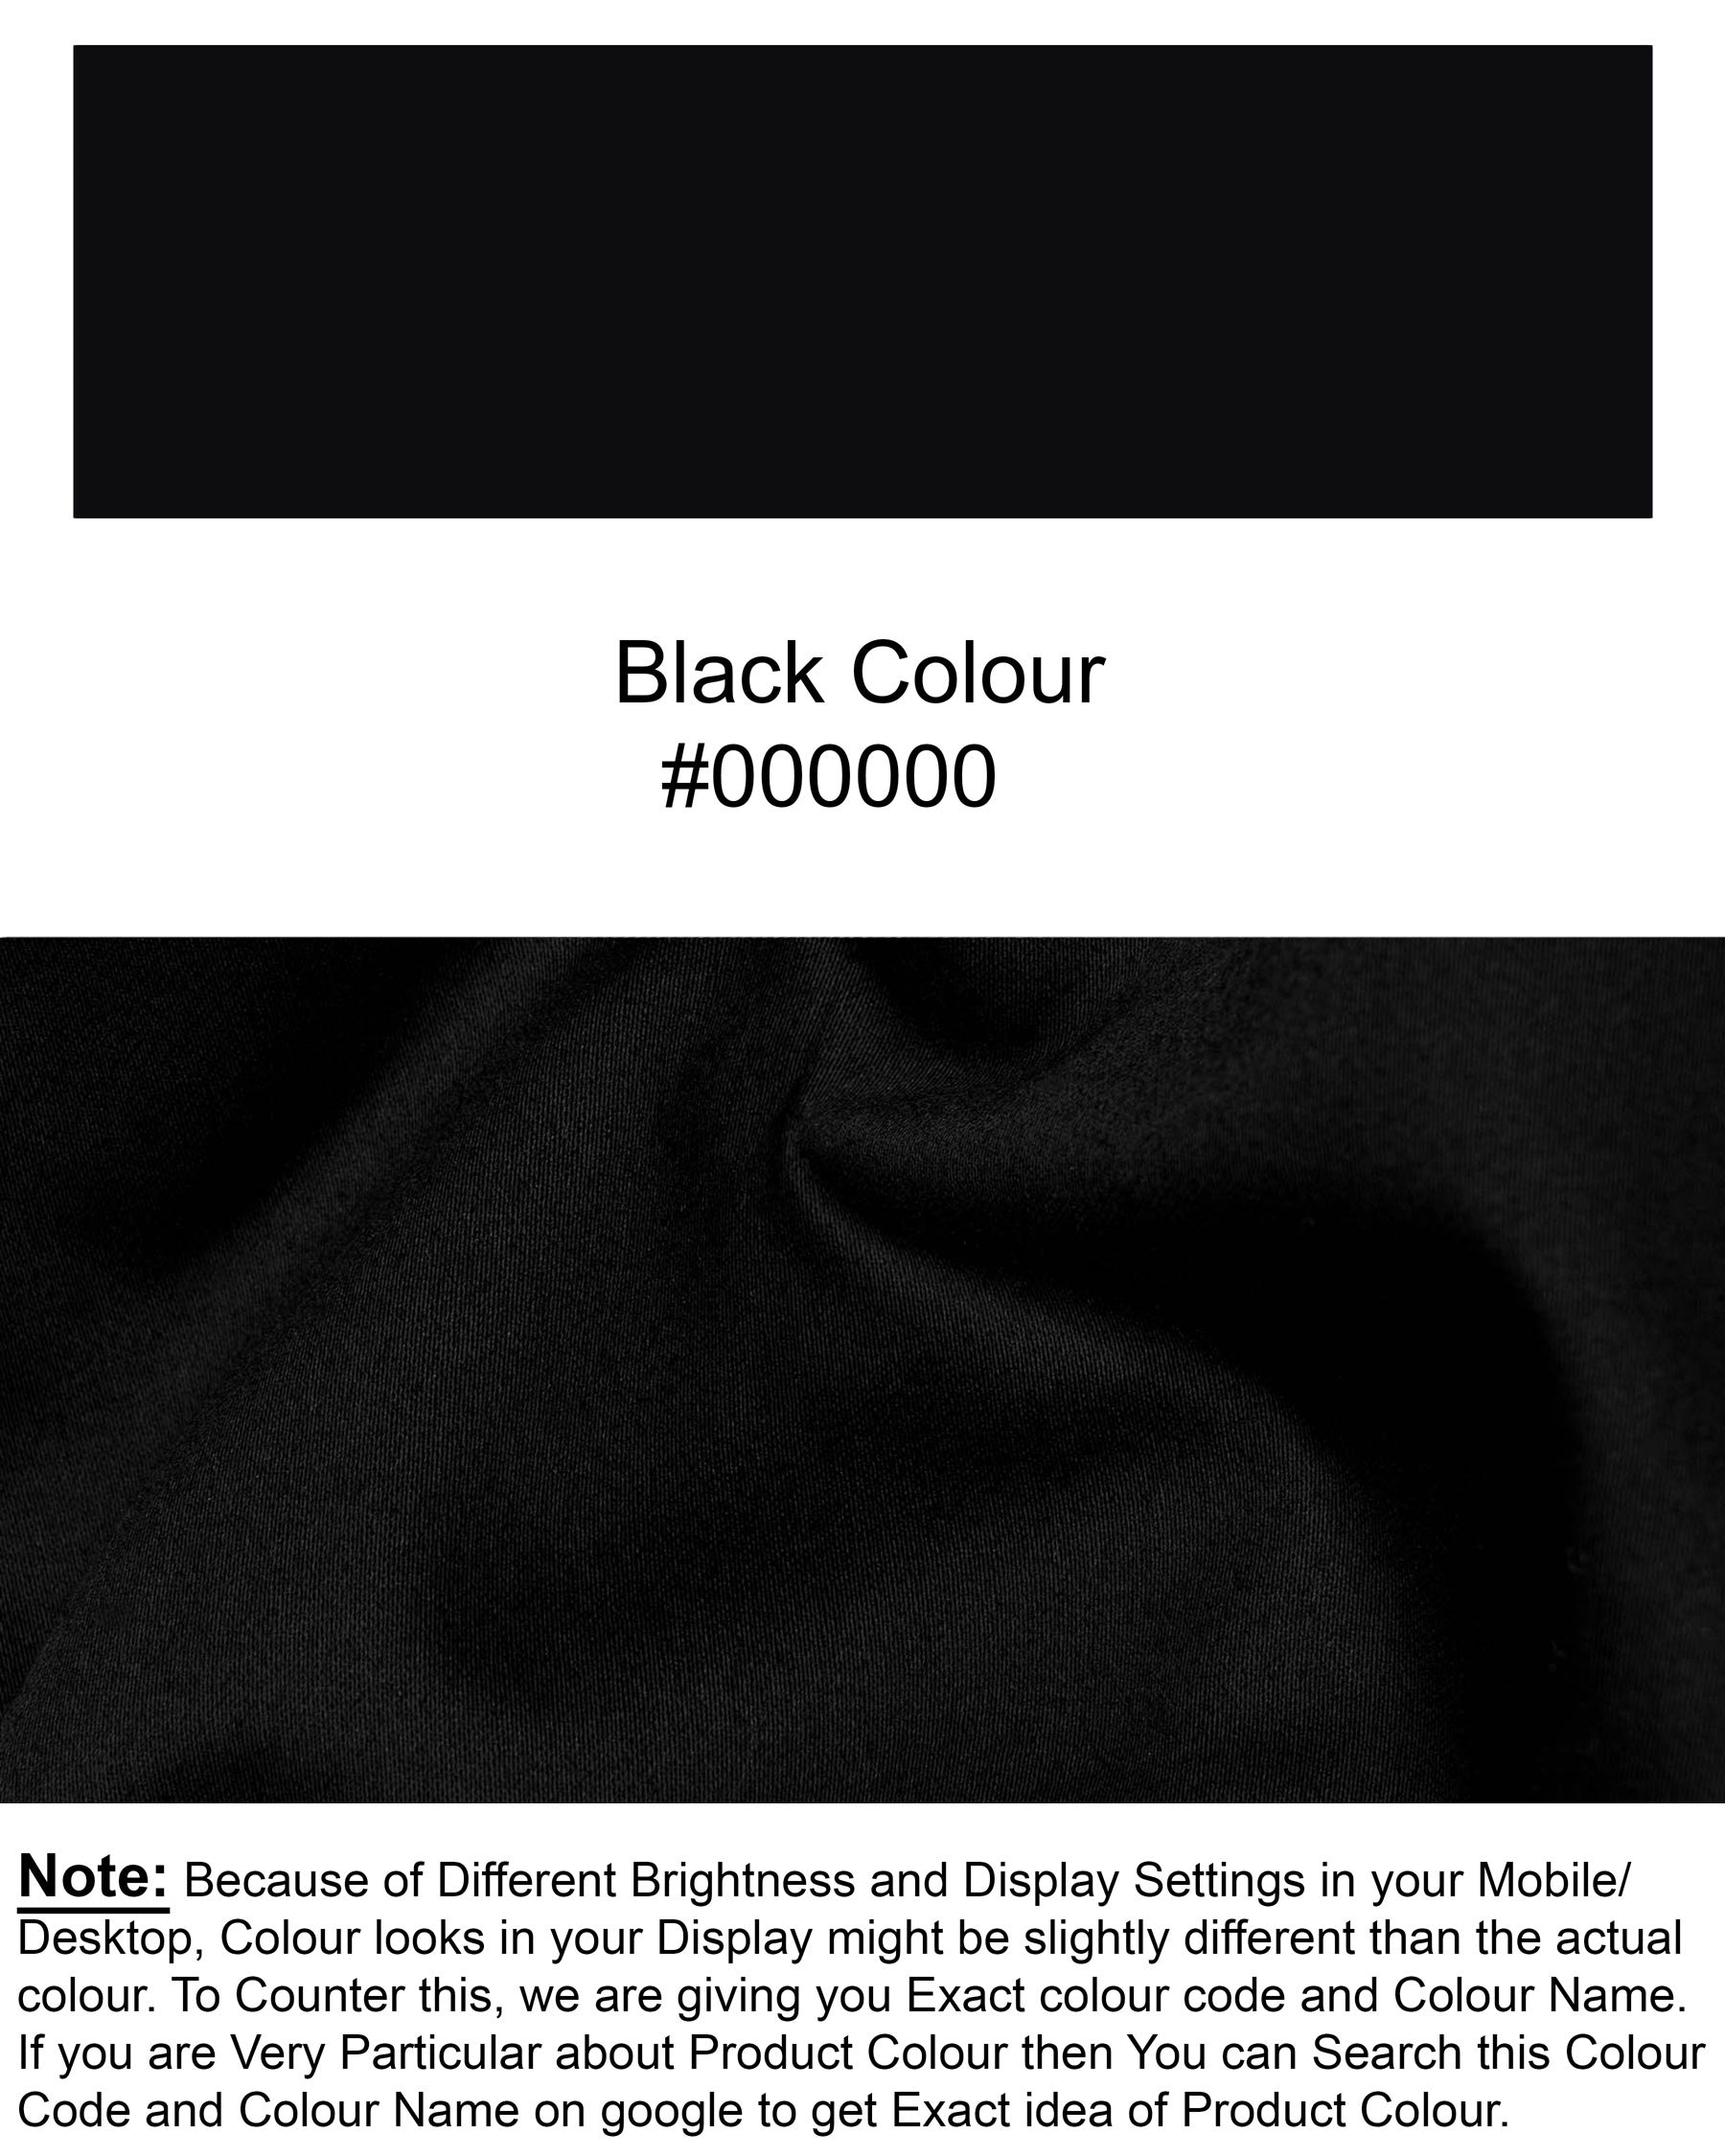 Jade Black with White Striped  Super Soft Premium Cotton Designer Shorts SR143-28, SR143-30, SR143-32, SR143-34, SR143-36, SR143-38, SR143-40, SR143-42, SR143-44